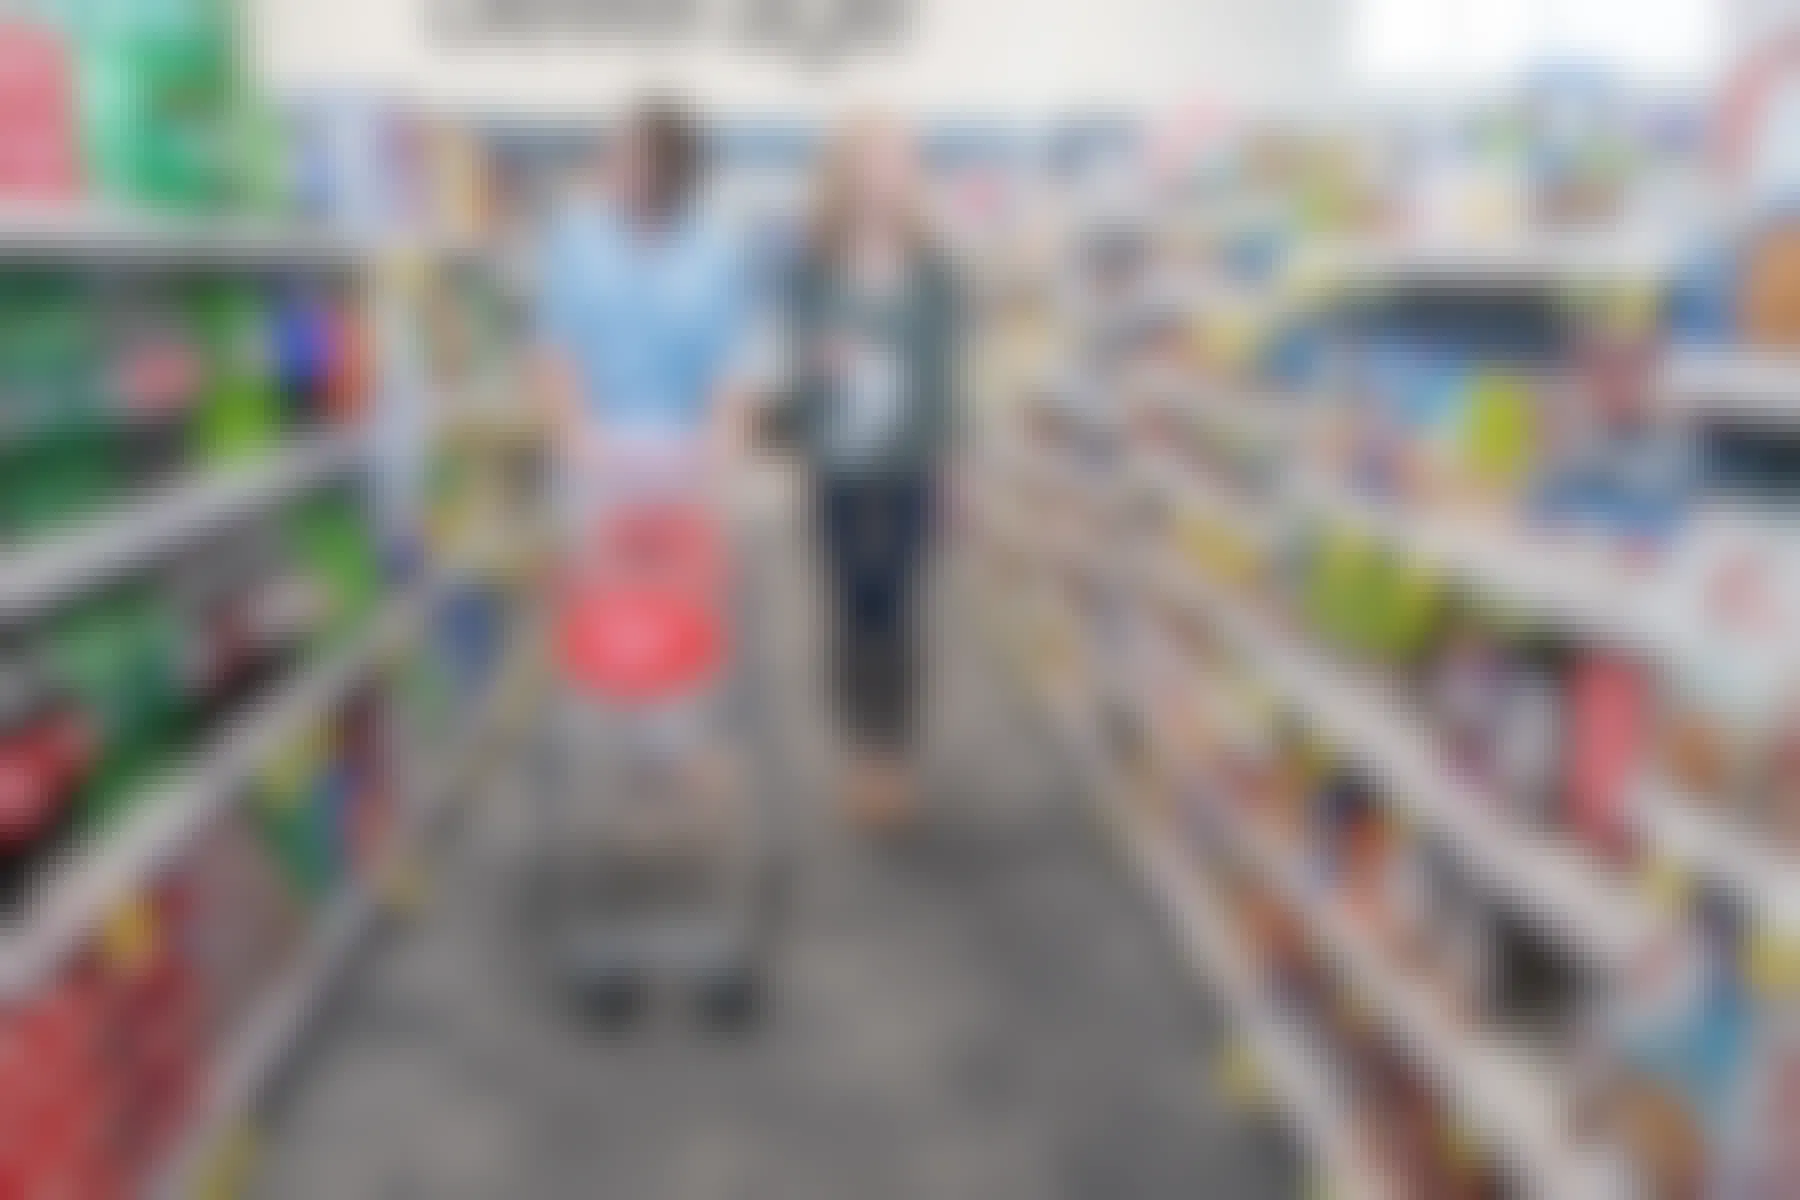 Two women shopping in an aisle at CVS, one of them pushing a CVS shopping cart.